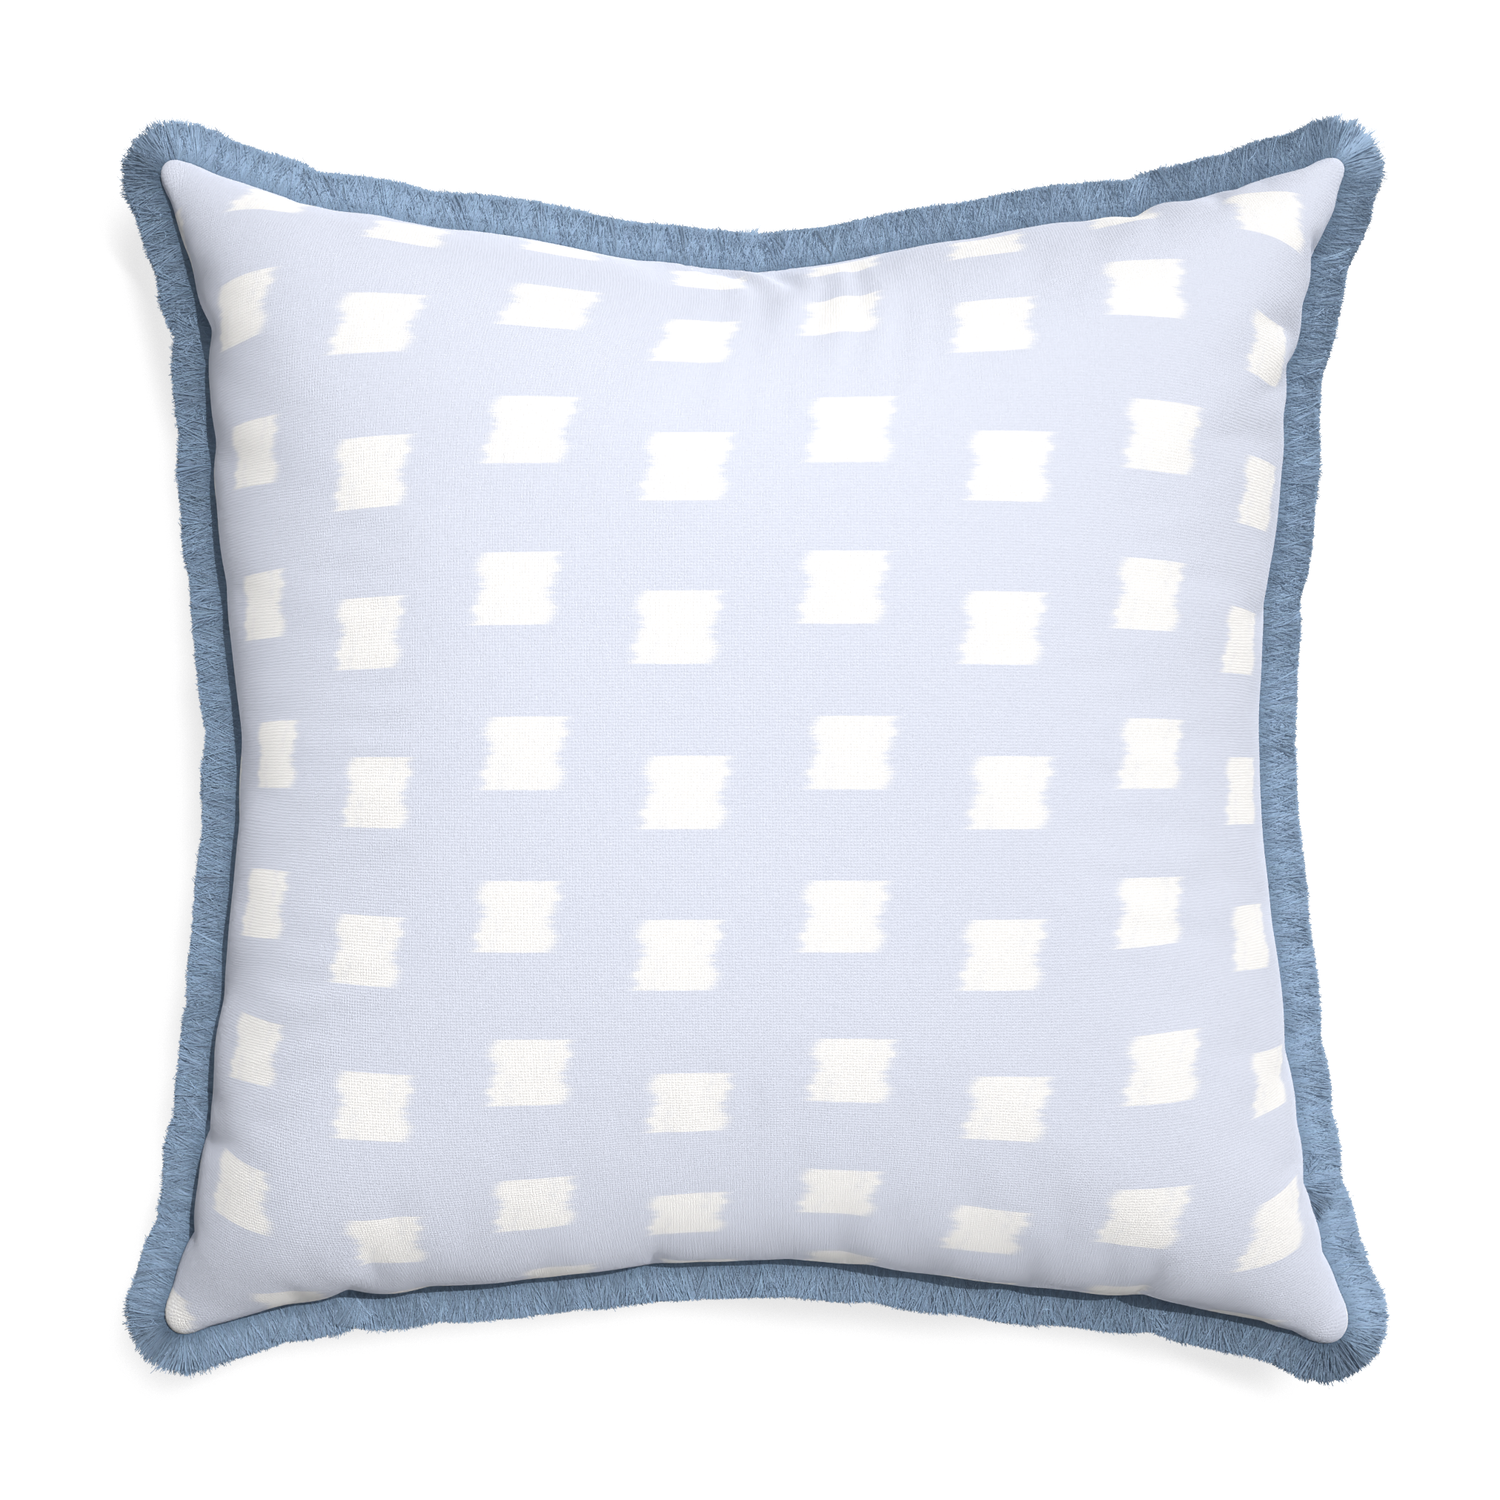 Euro-sham denton custom pillow with sky fringe on white background